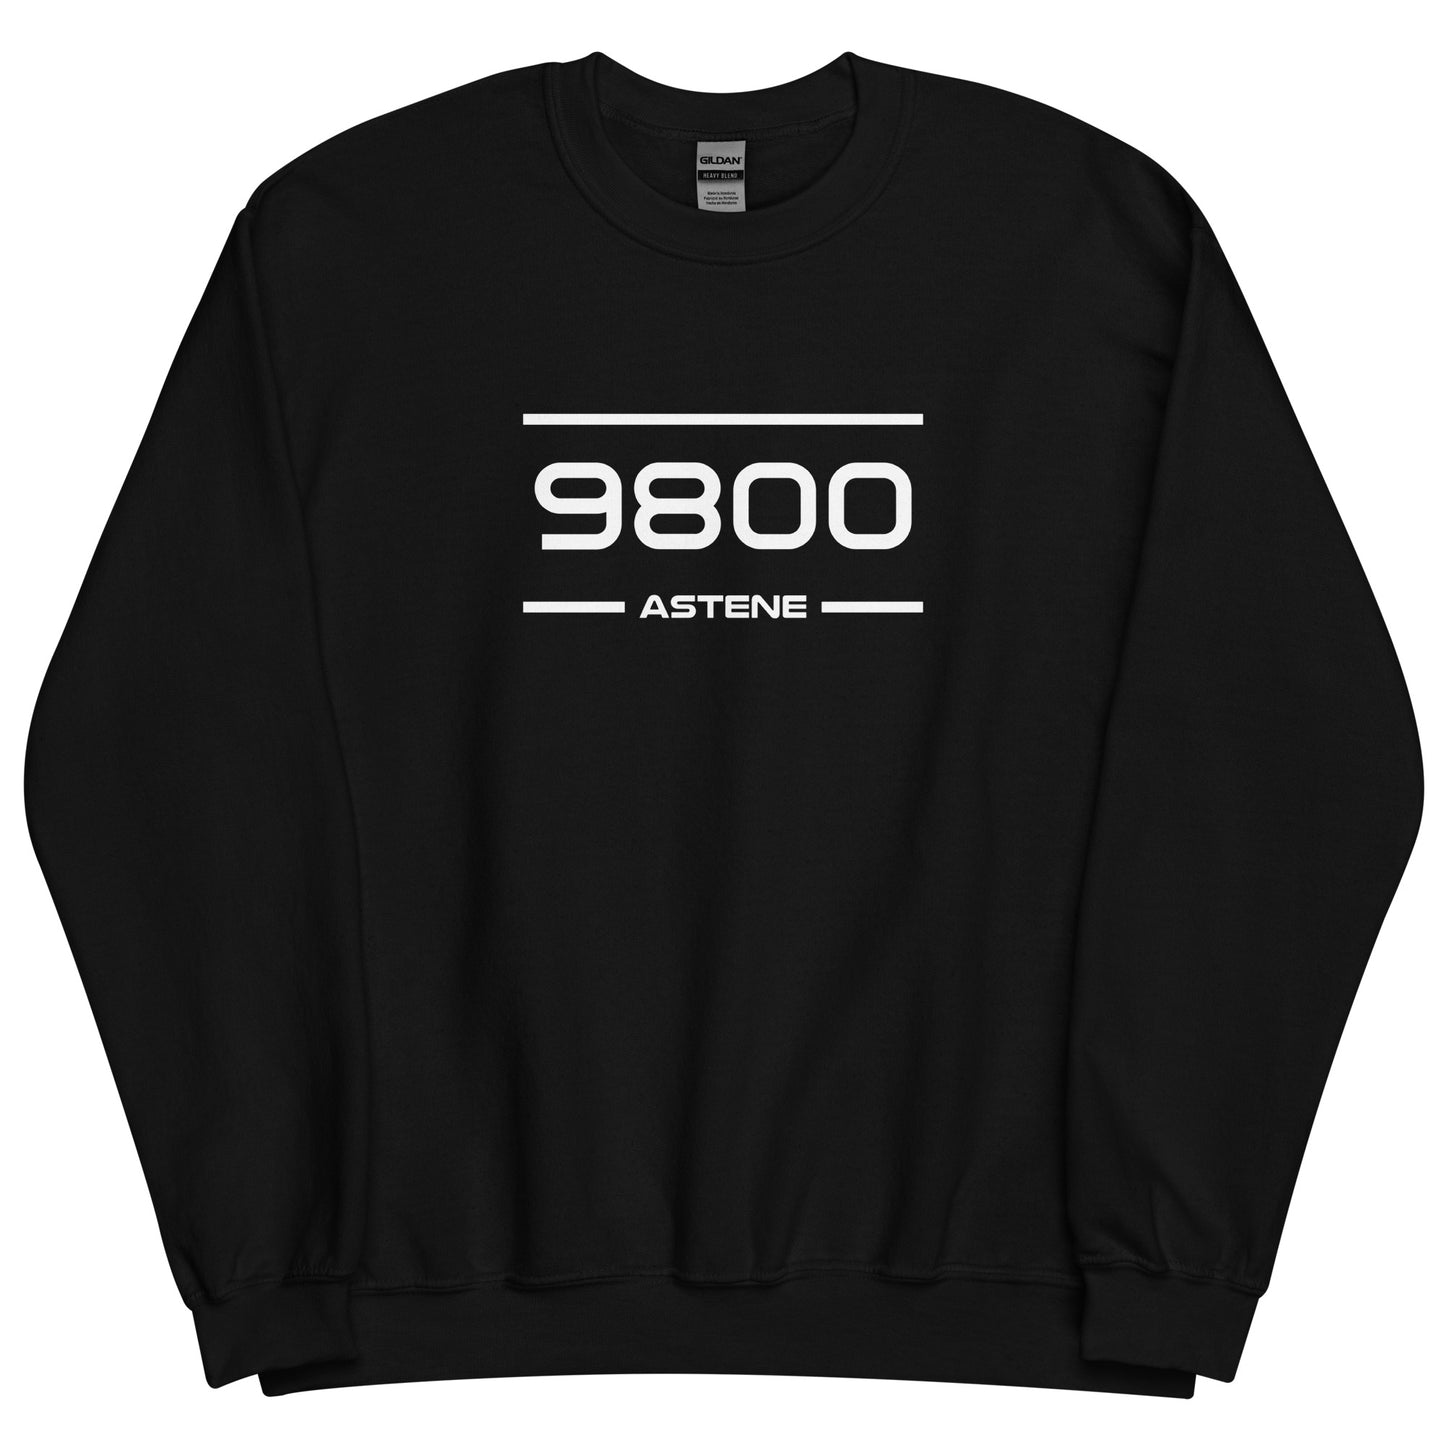 Sweater - 9800 - Astene (M/V)